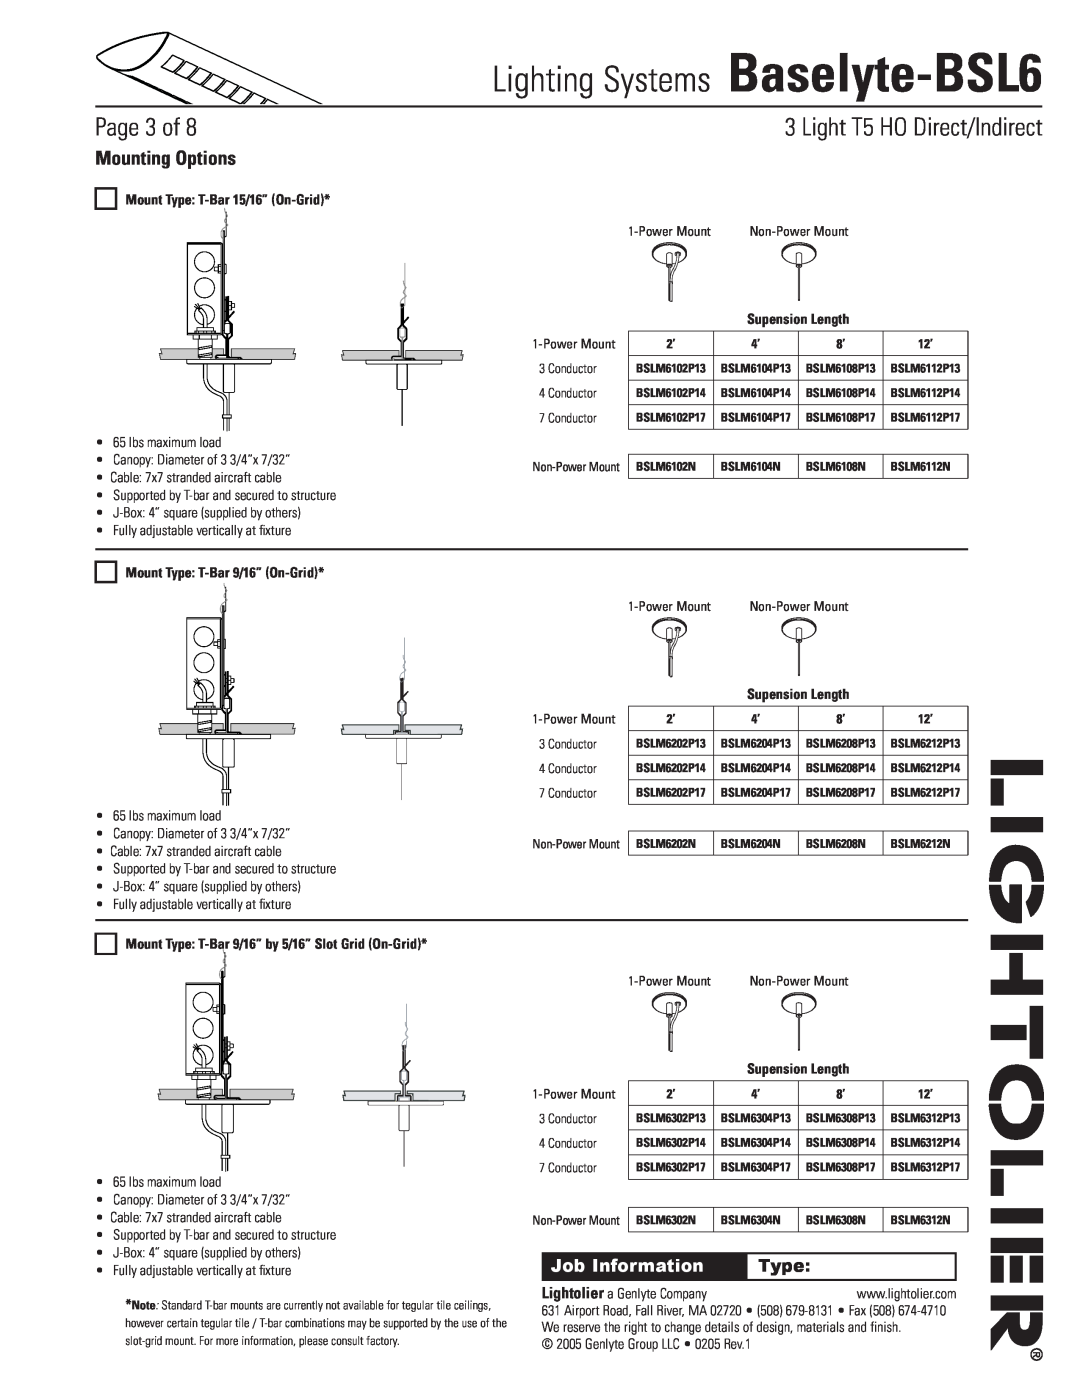 Lightolier Baselyte-BSL6 Mounting Options, Mount Type T-Bar15/16” On-Grid, Supension Length, Mount Type T-Bar9/16” On-Grid 